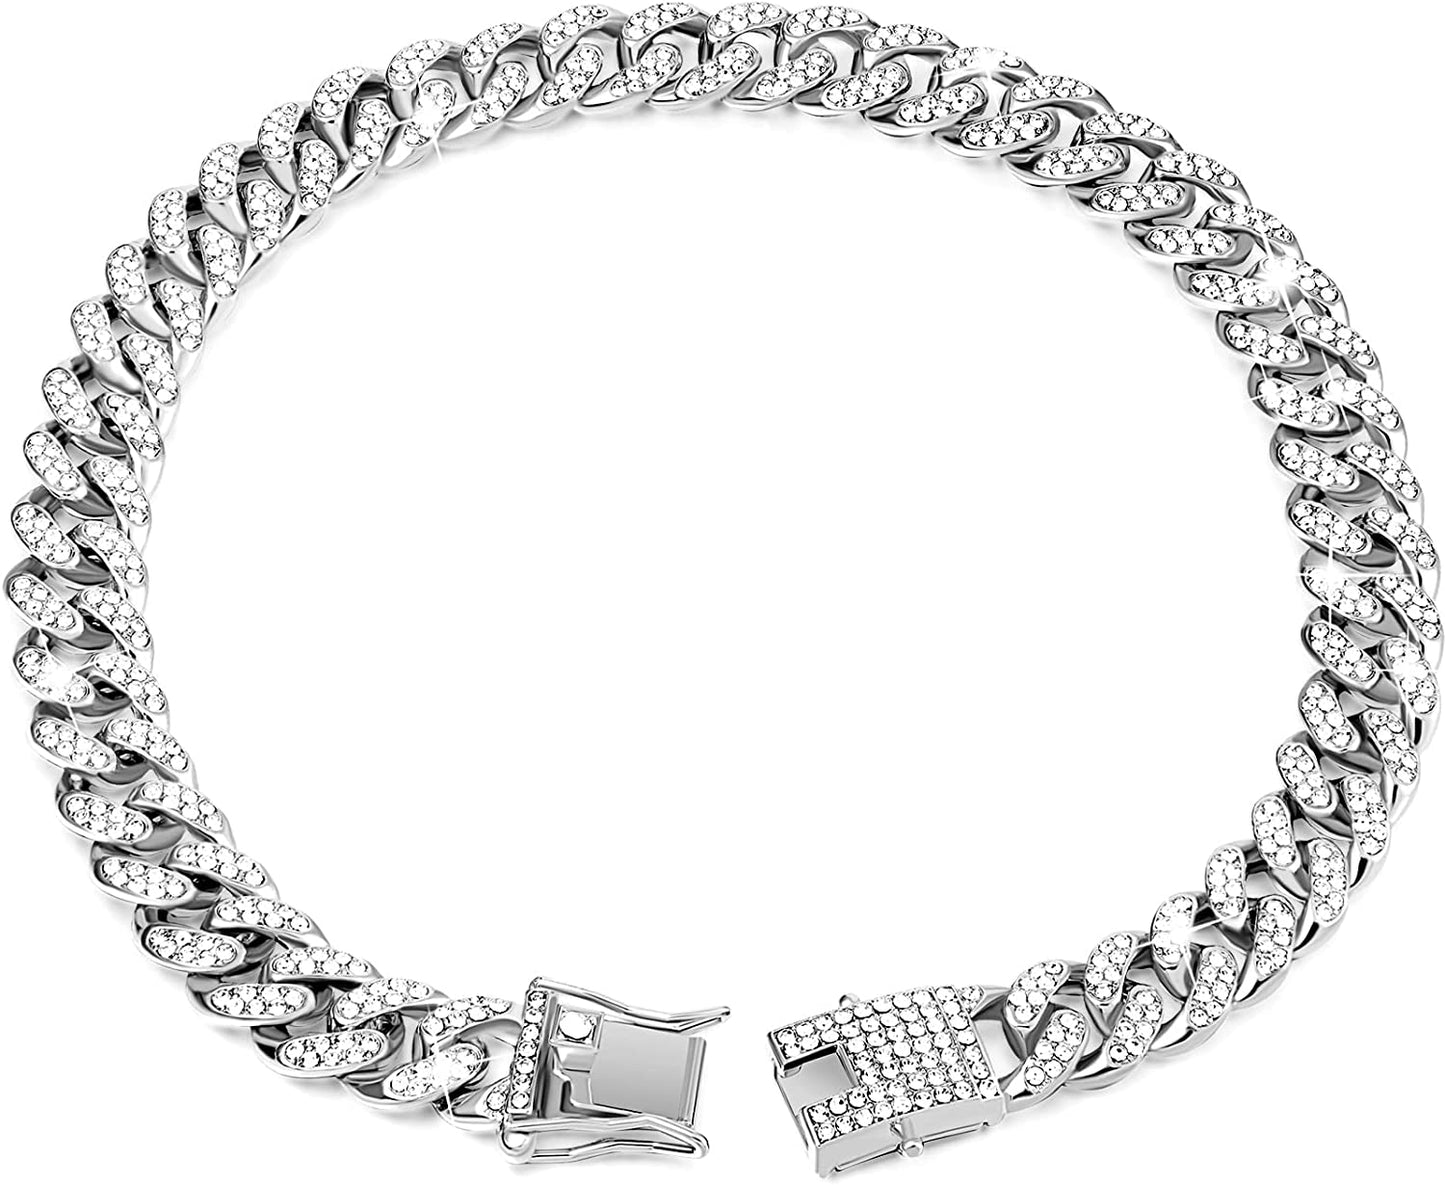 Luxury Diamond Dog Cuban Chain Collar | Secure Buckle | Pet Necklace Jewelry Accessories